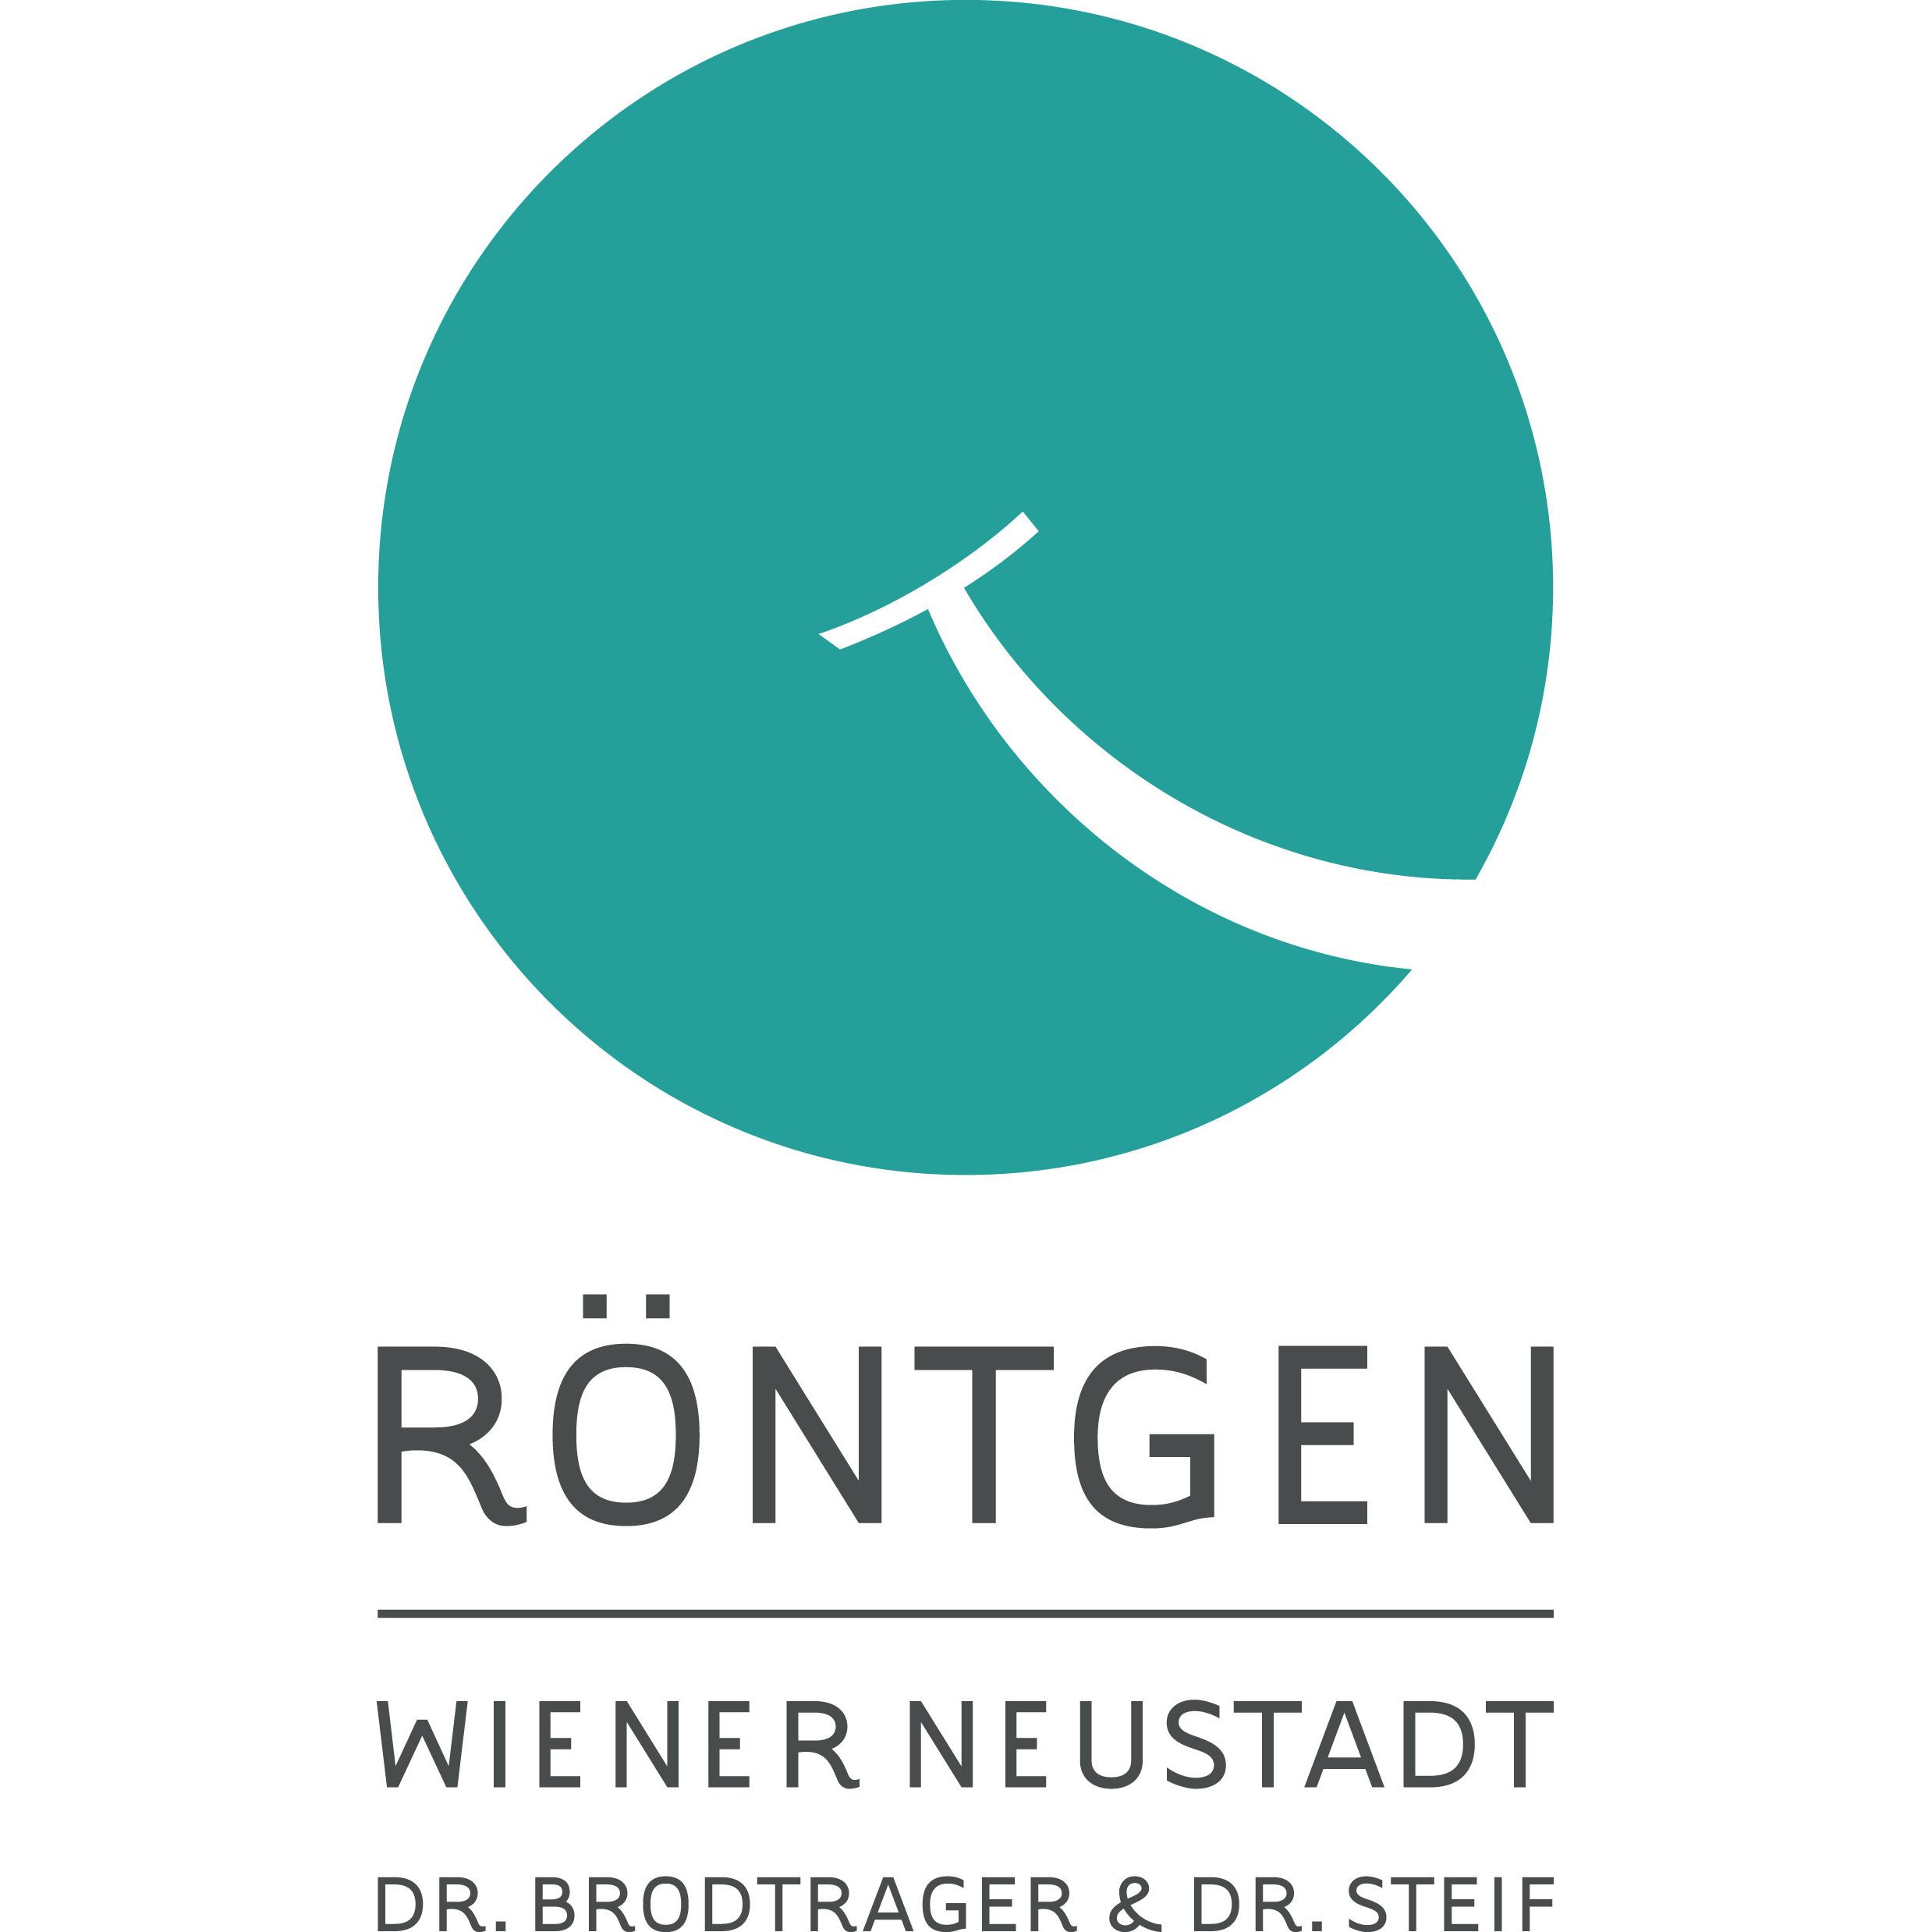 Röntgen Wiener Neustadt Dr. Brodtrager & Dr. Steif Logo